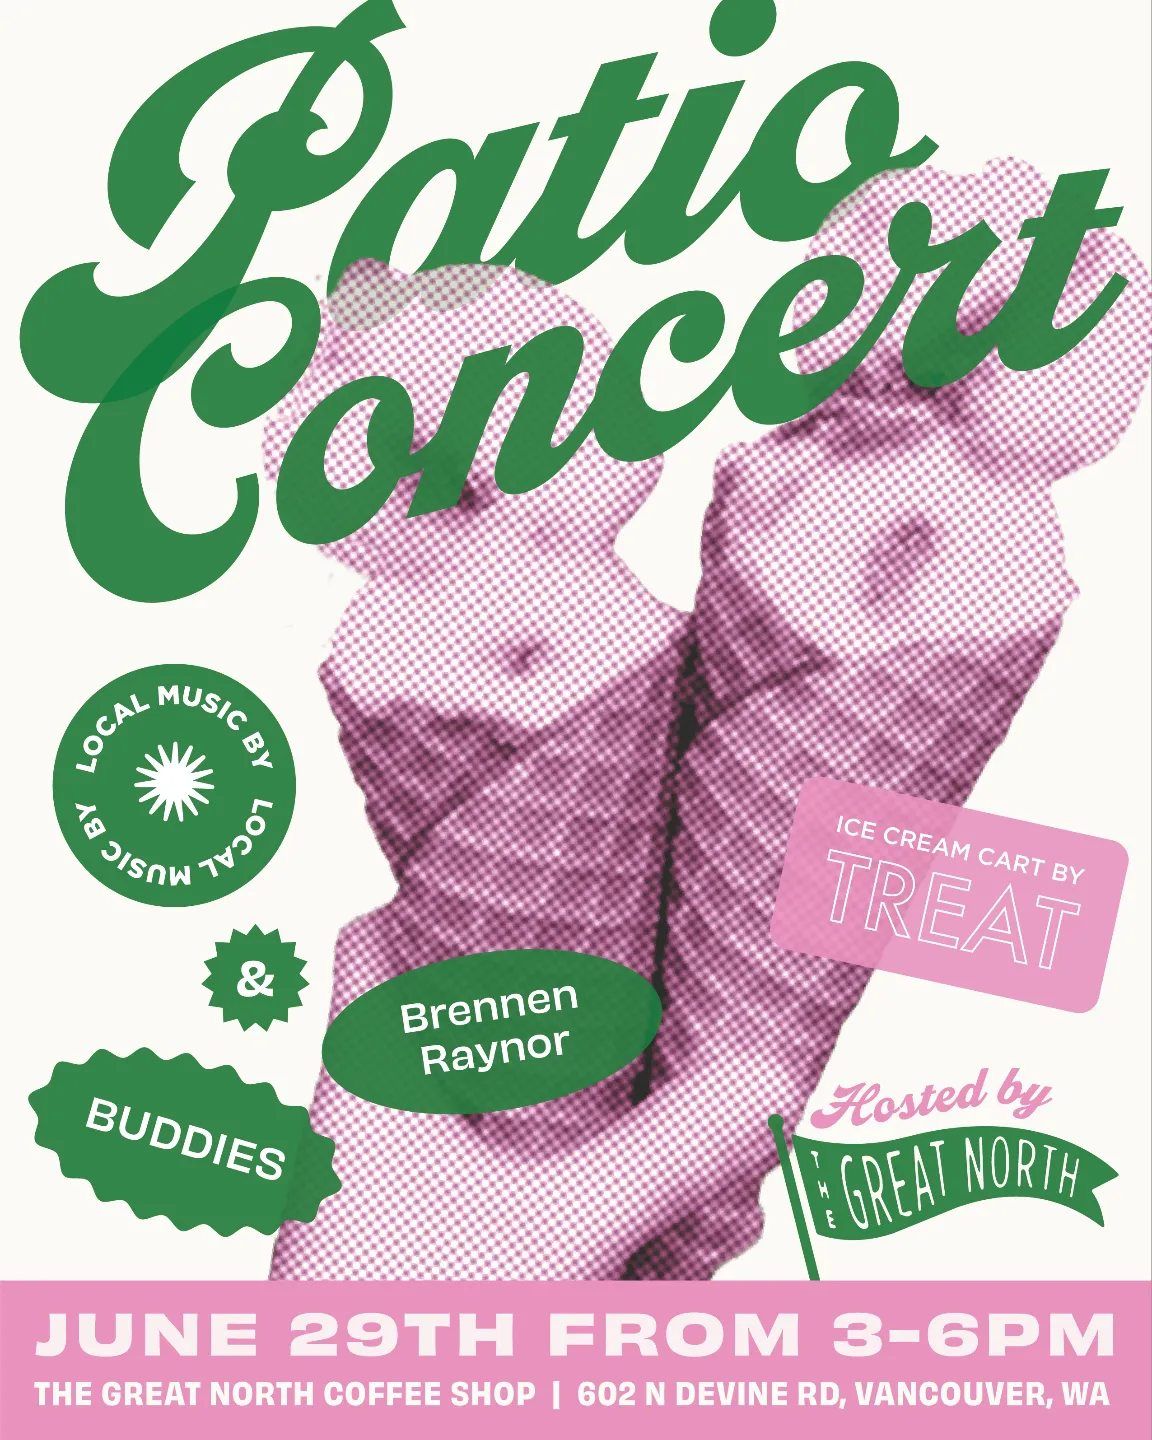 PATIO CONCERT w\/ Buddies & Brennen Raynor & Ice Cream by Treat